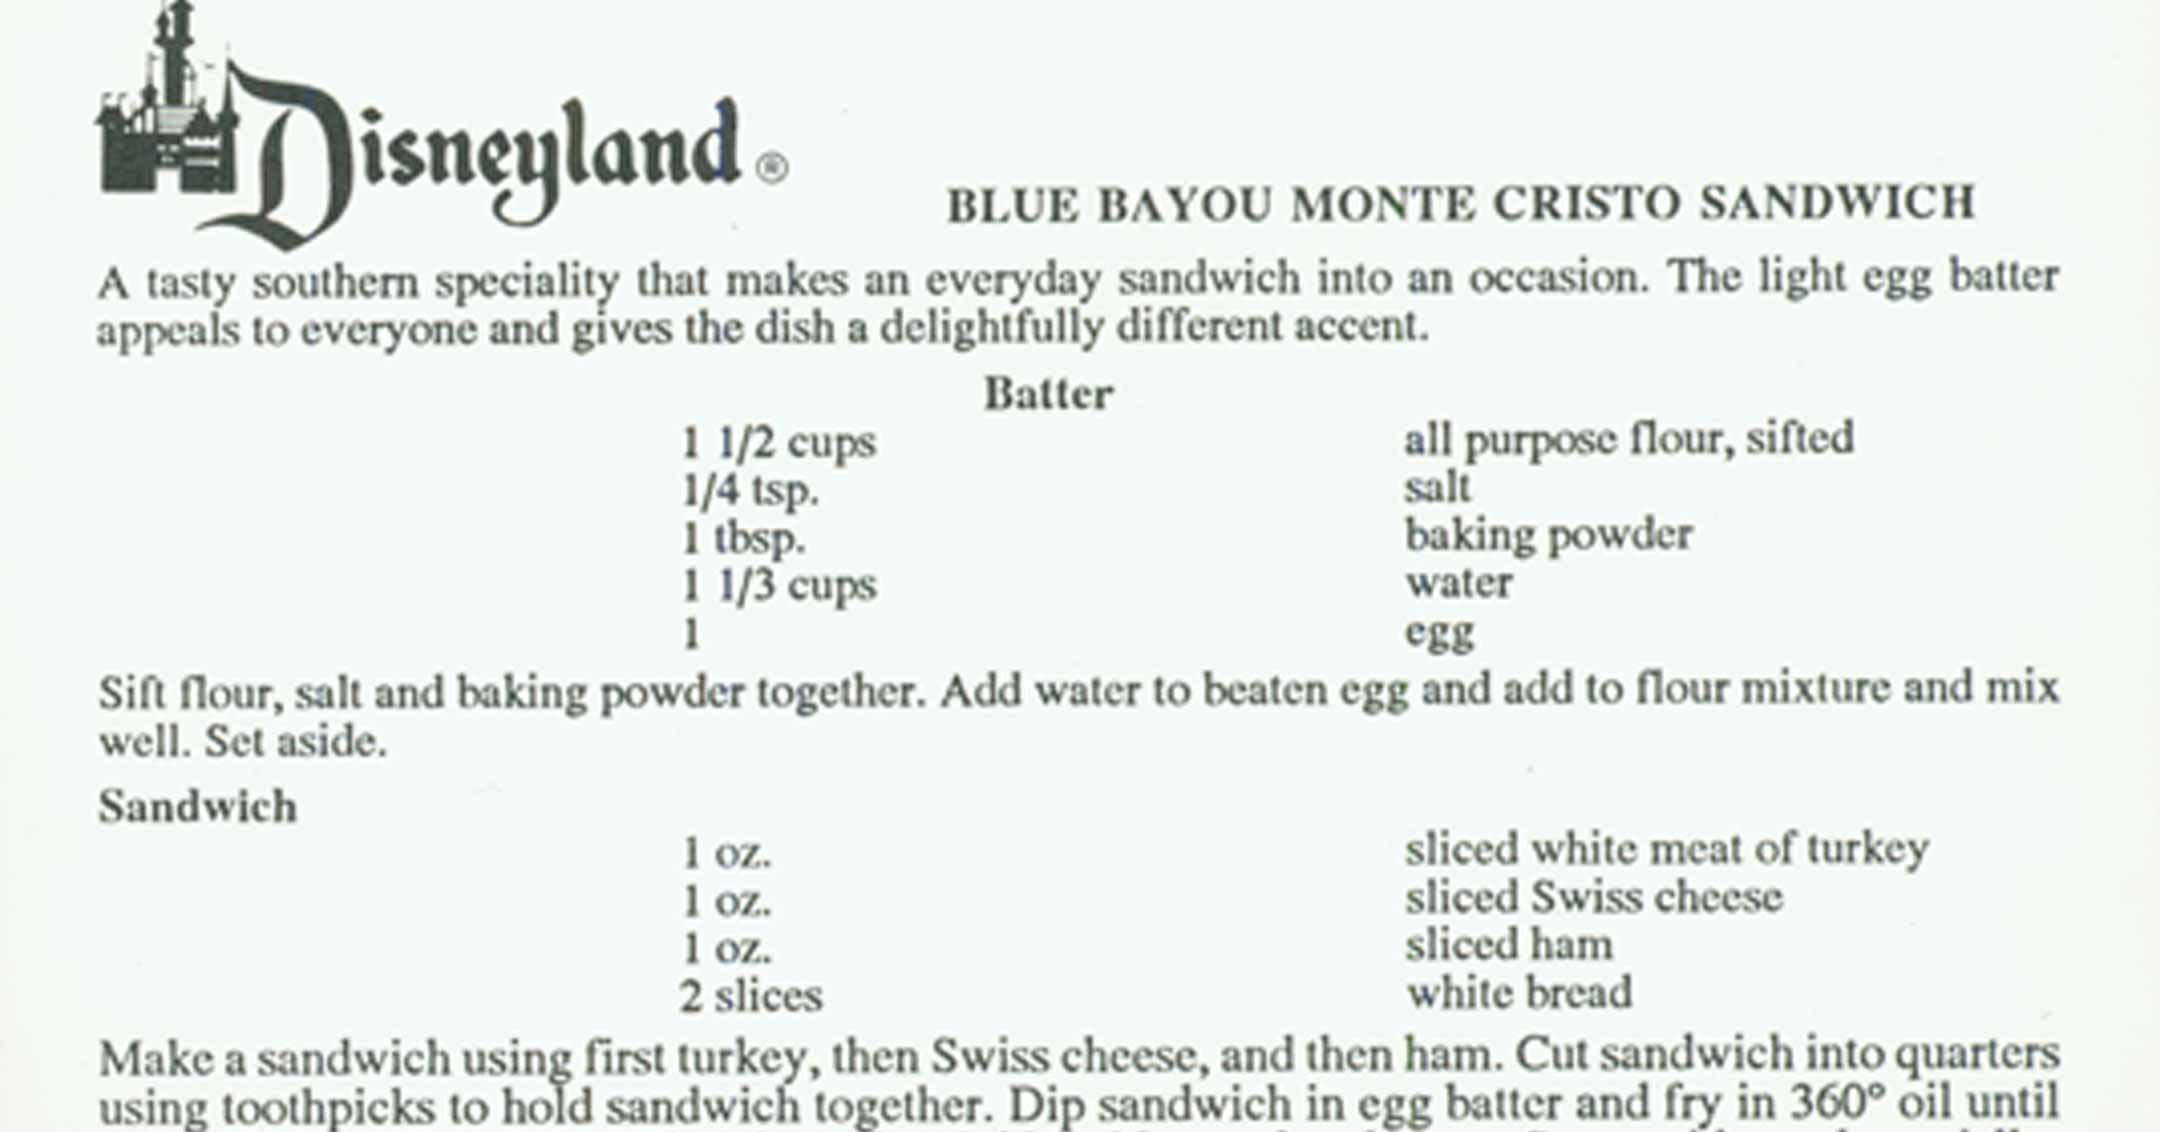 Disneyland Blue Bayou Monte Cristo Sandwich recipe | WaltsApartment.com